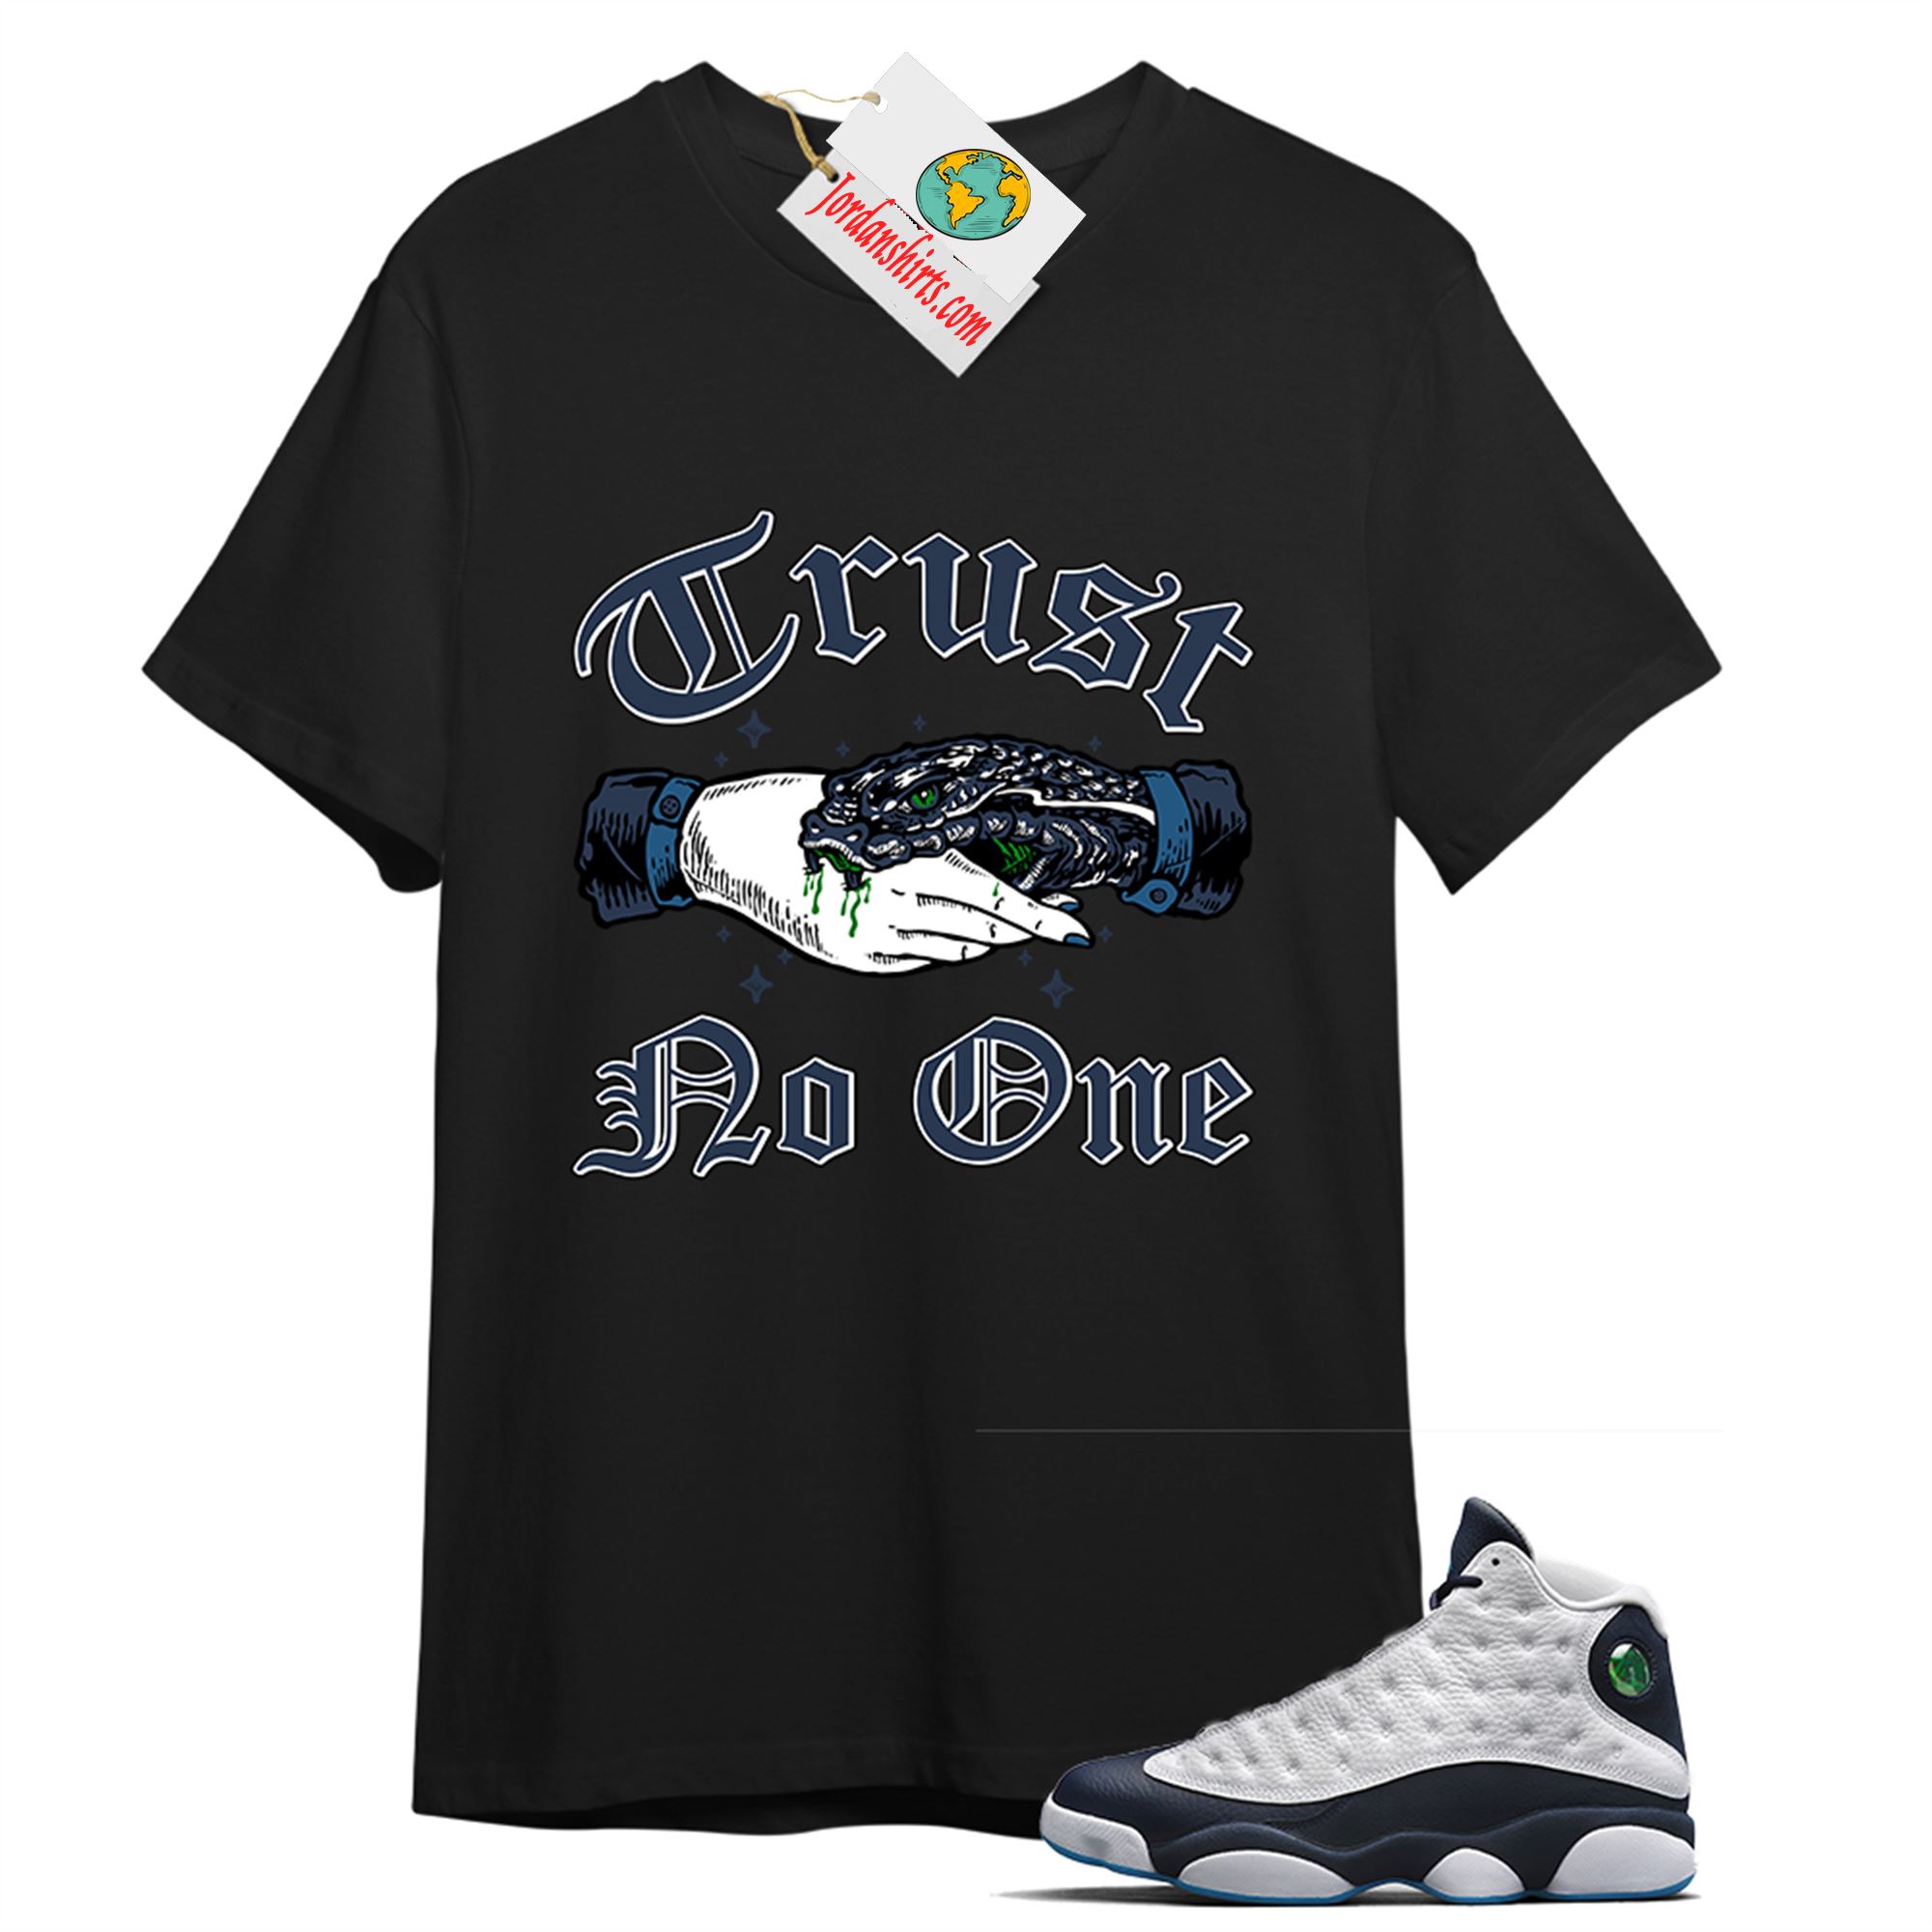 Jordan 13 Shirt, Trust No One Deal With Snake Black T-shirt Air Jordan 13 Obsidian 13s Plus Size Up To 5xl